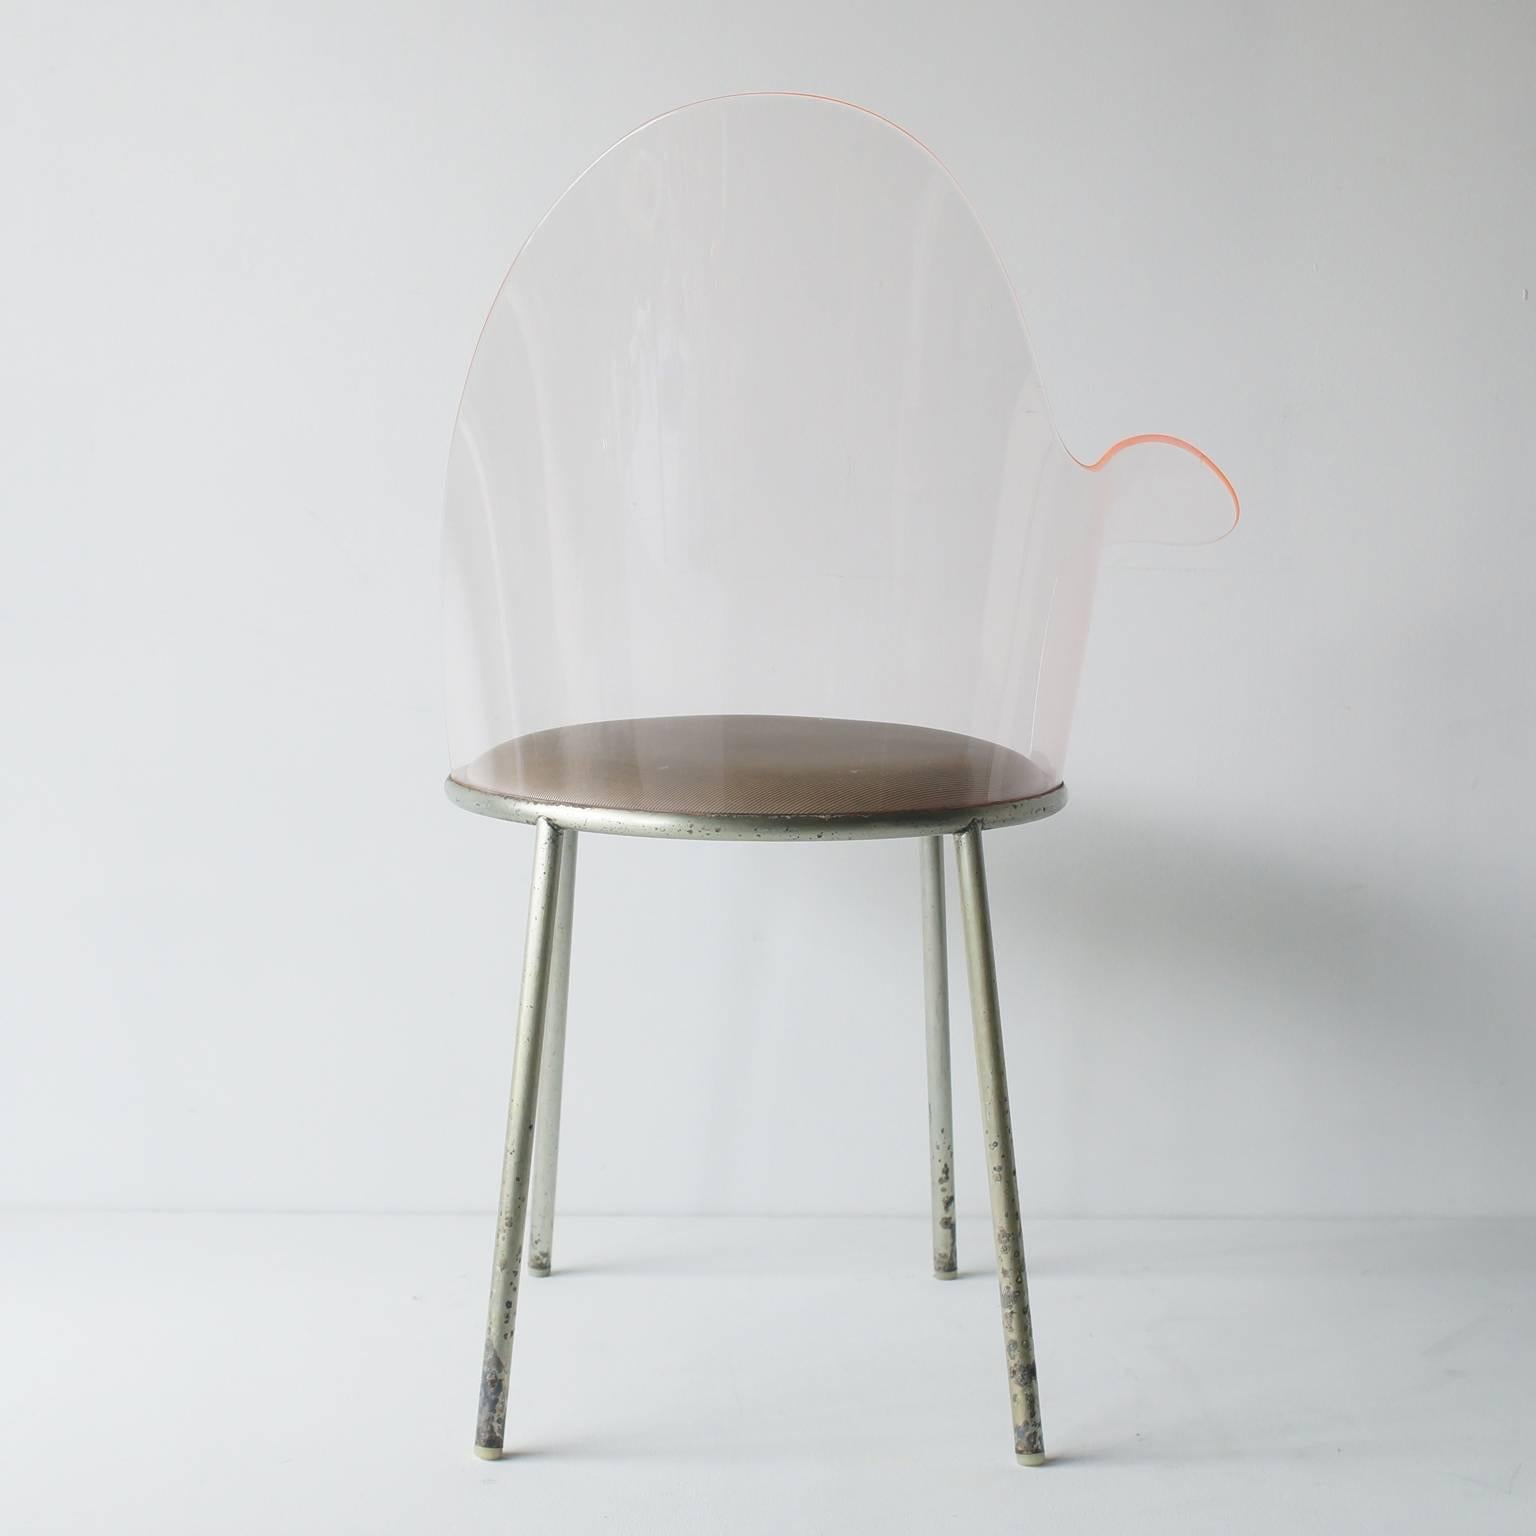 Painted Acrylic Back Chair by Shiro Kuramata